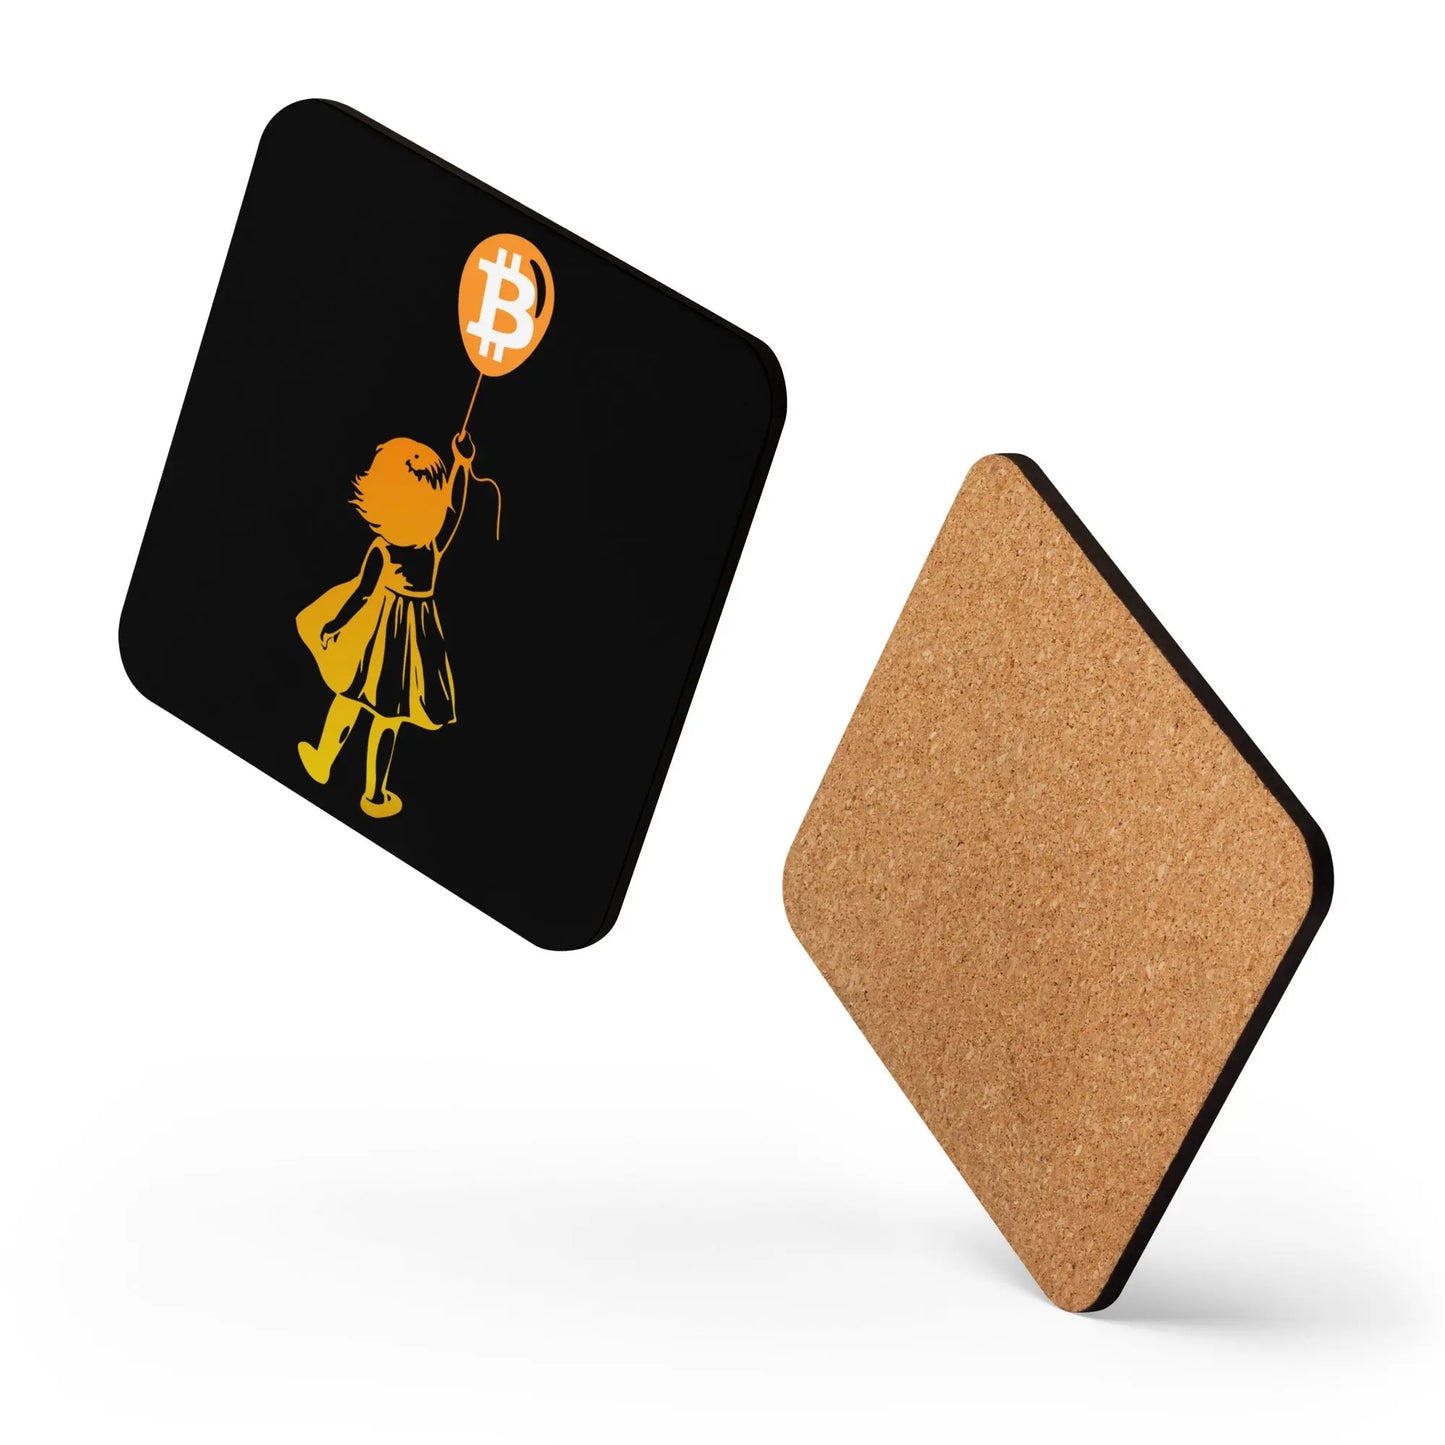 Bitcoin Balloon Girl - Cork-back Bitcoin Coaster